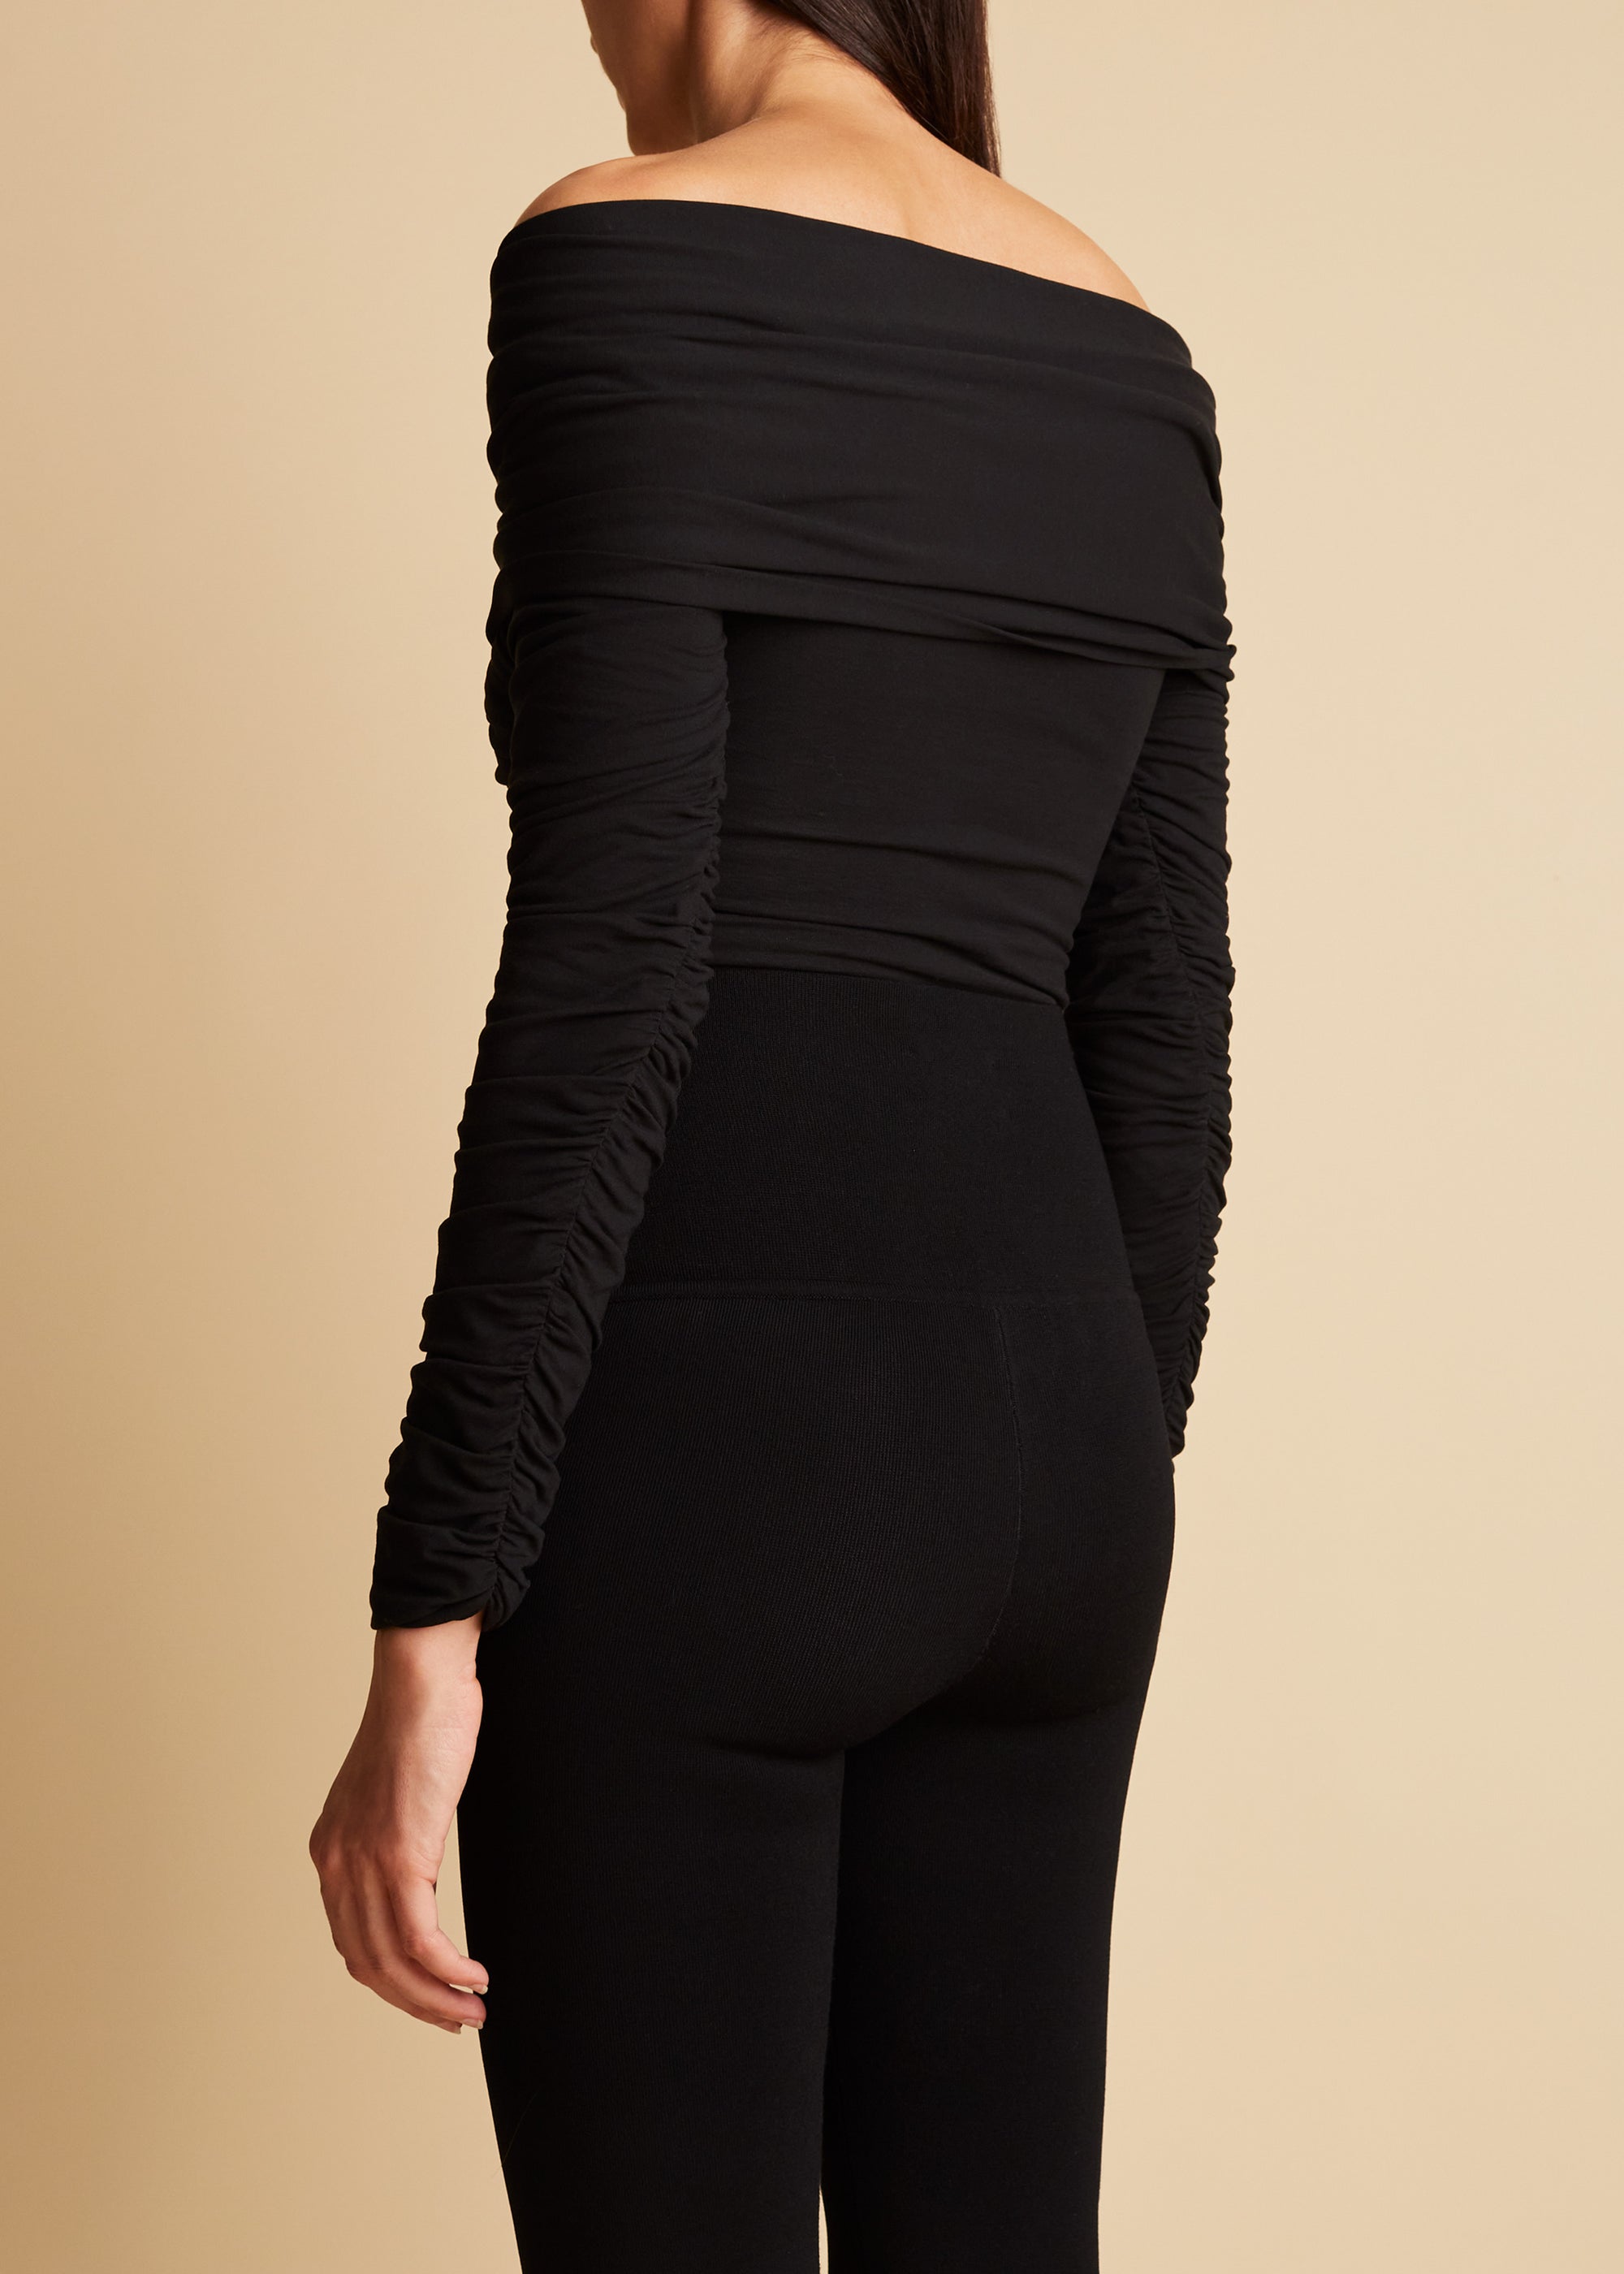 Lili bodysuit - Black